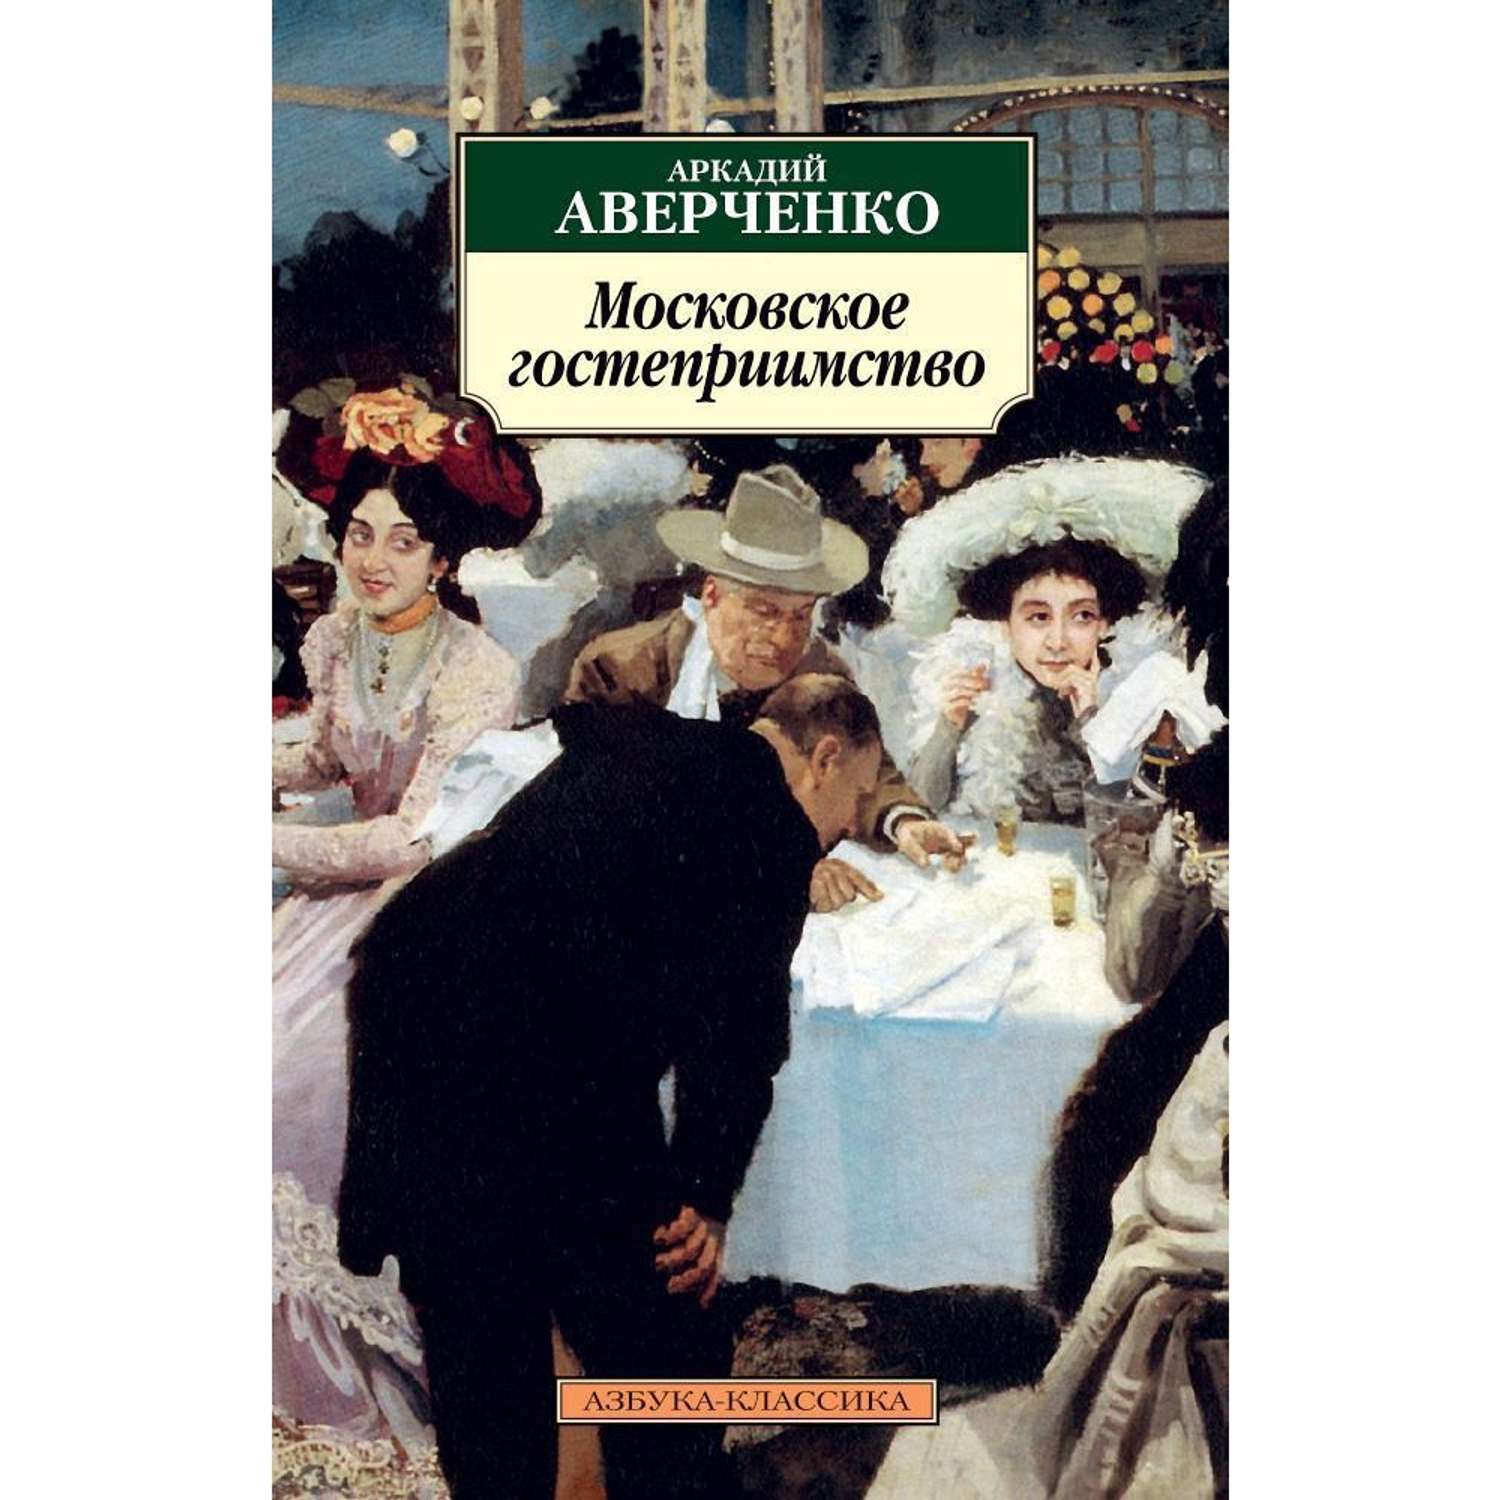 Книга АЗБУКА Московское гостеприимство - фото 1